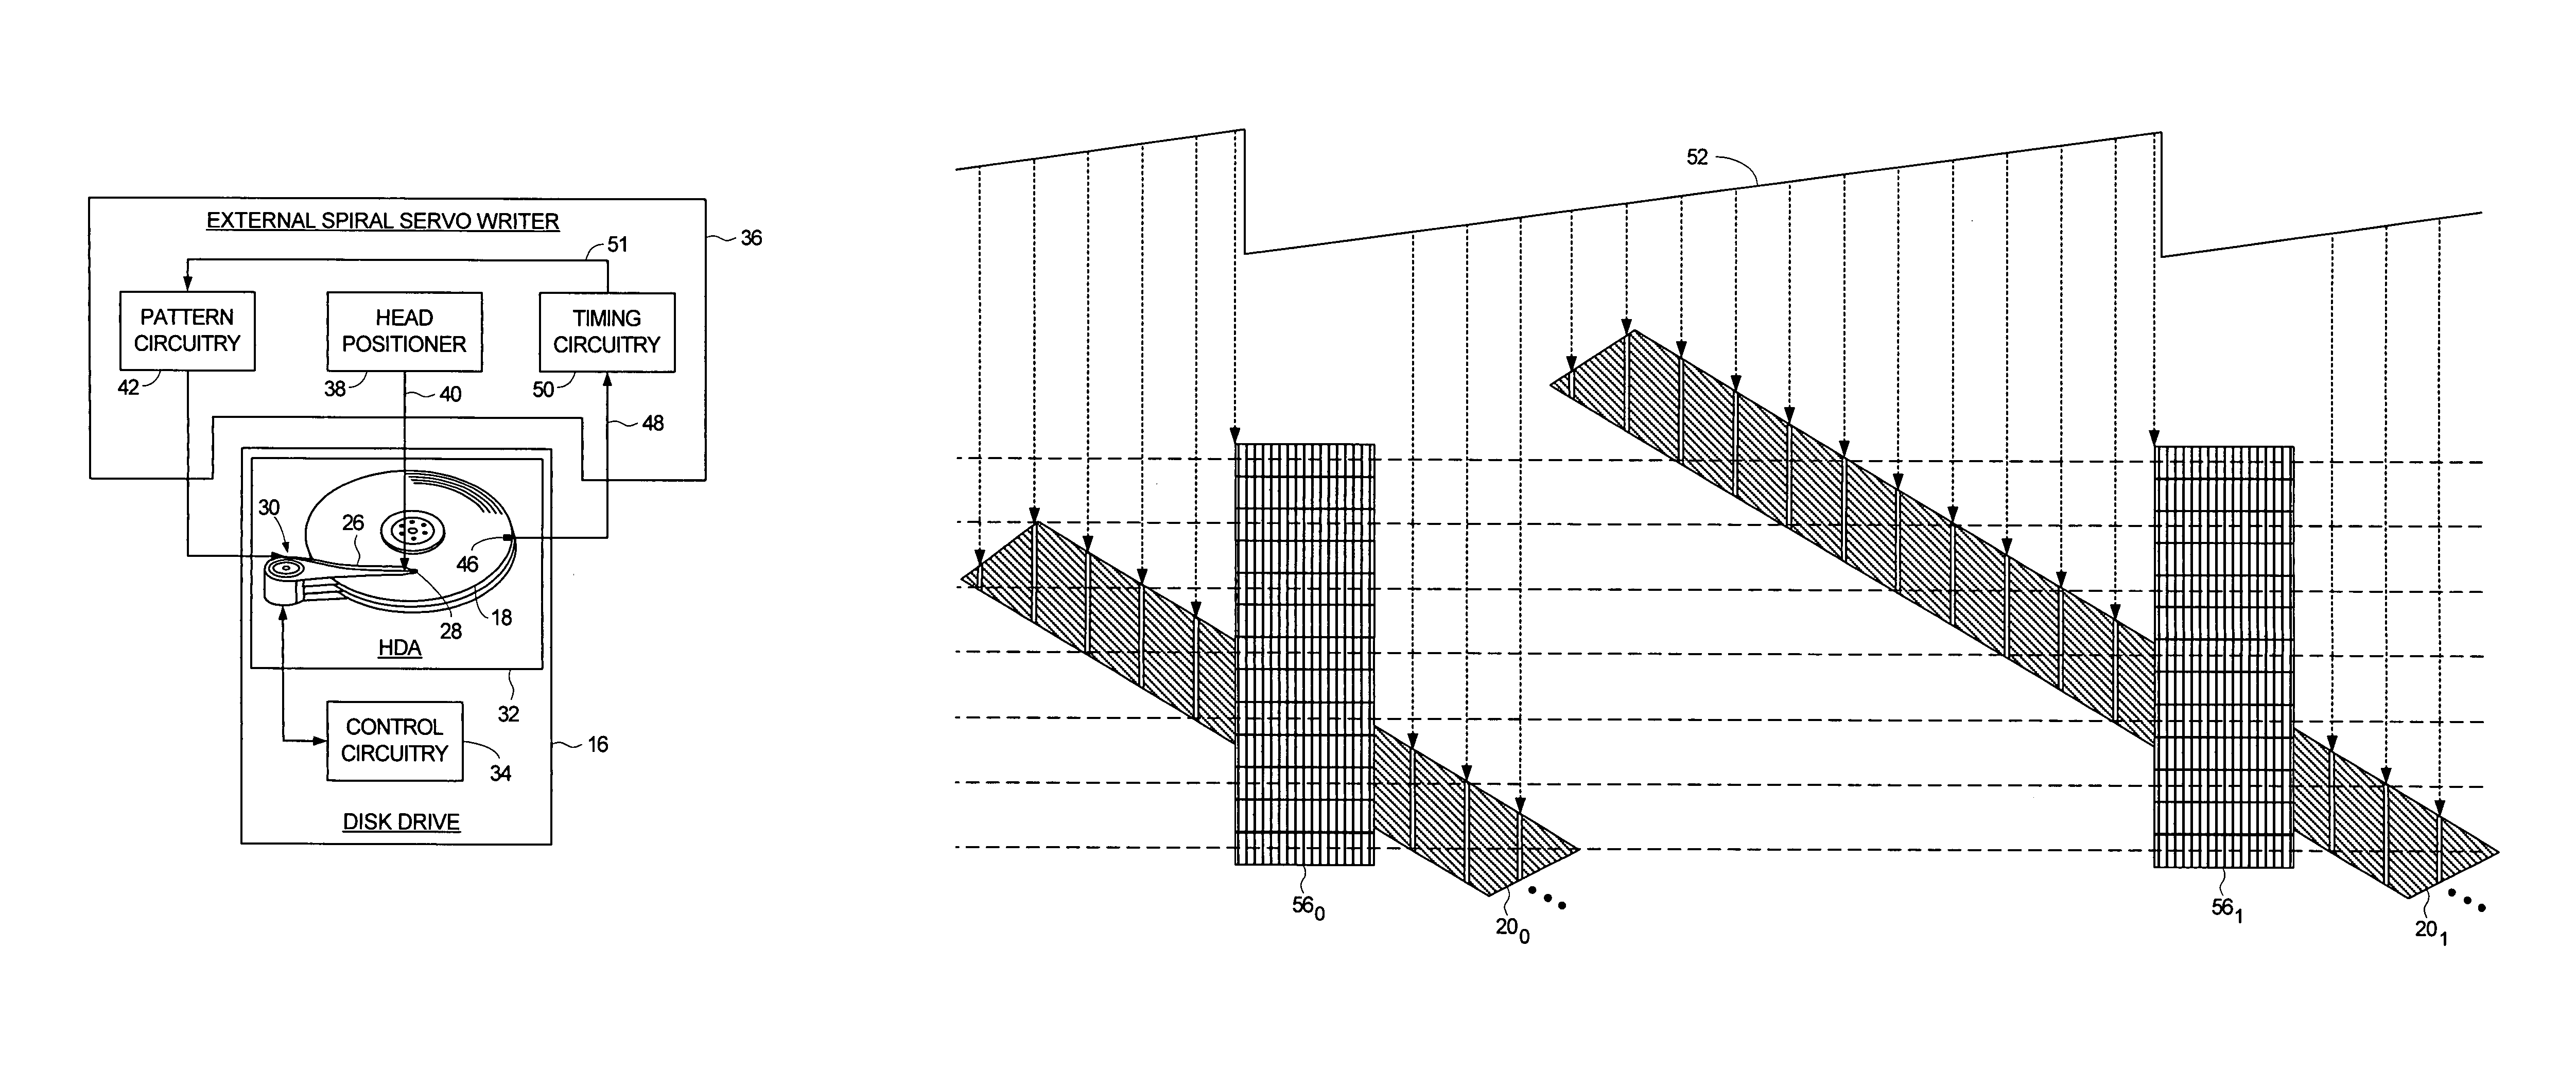 Adjusting track density by changing slope of spiral tracks used to servo write a disk drive